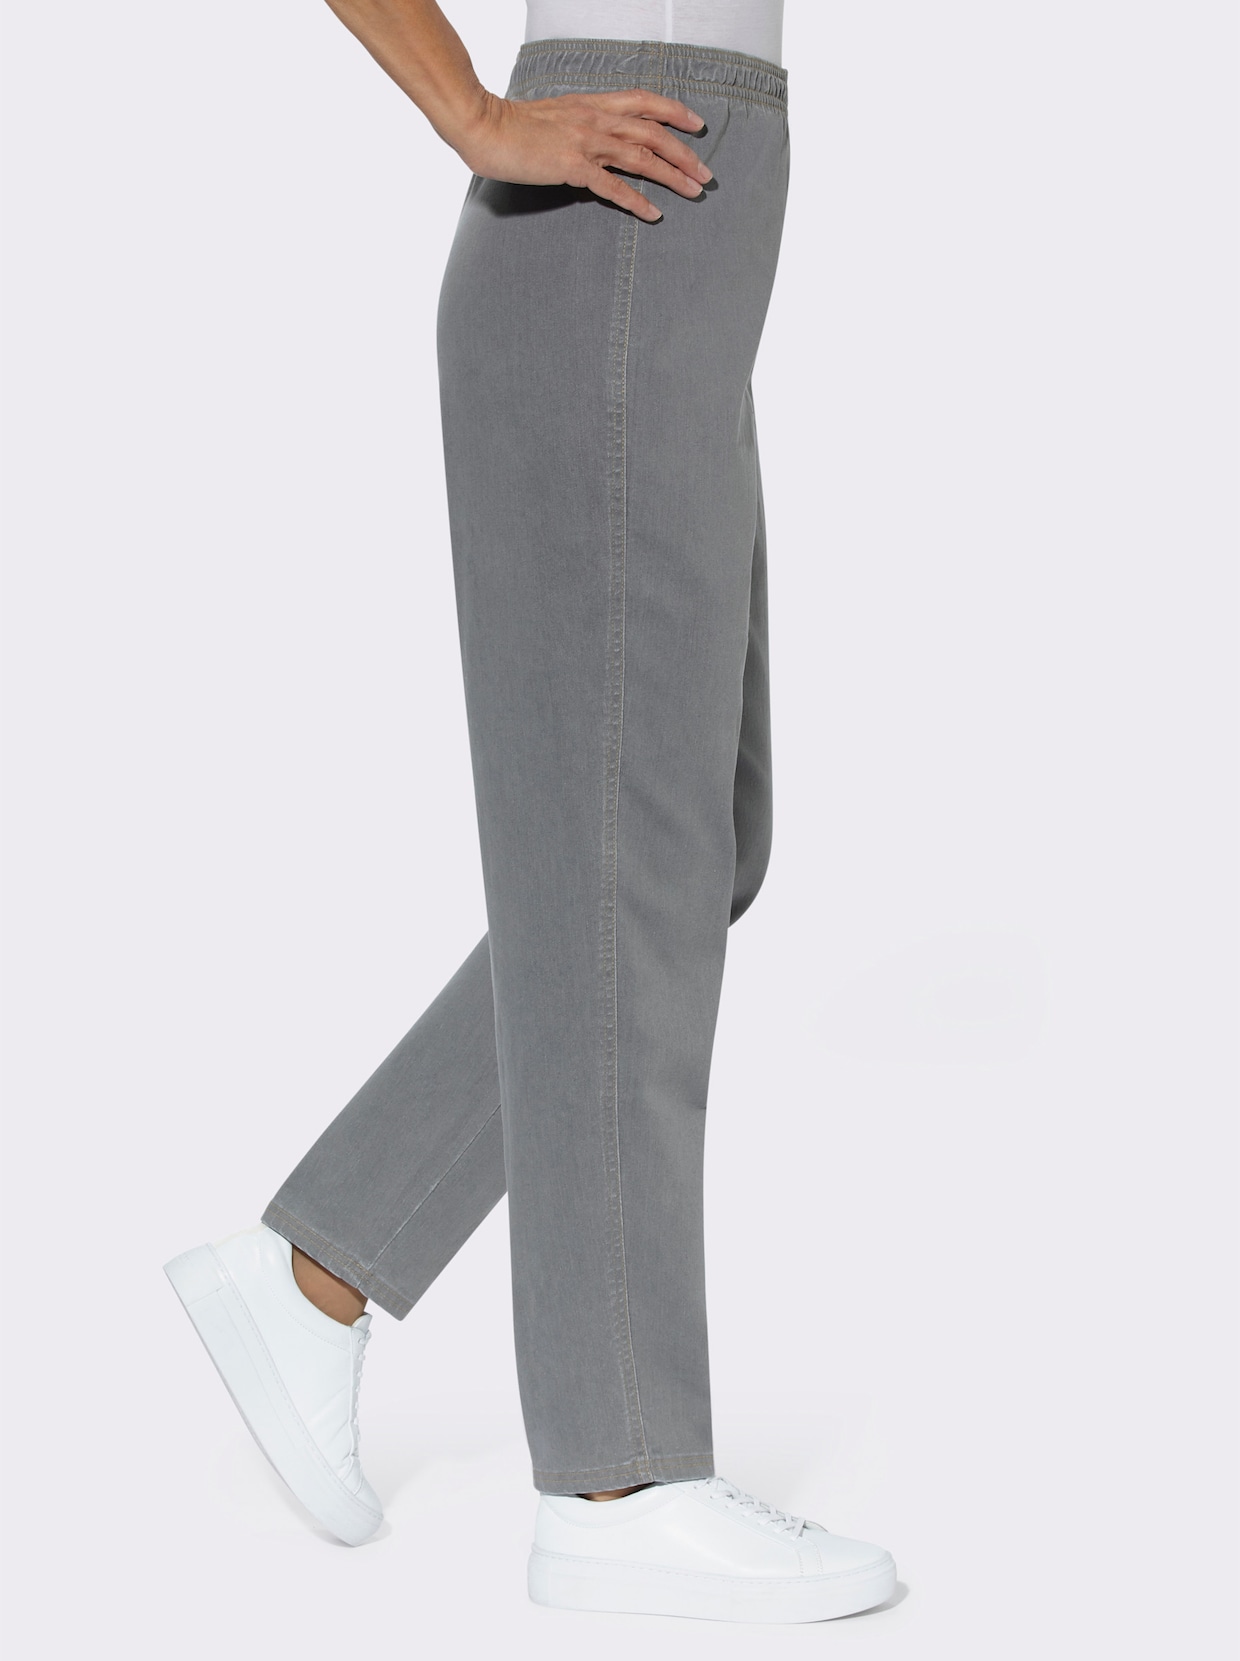 Jeans - grey denim